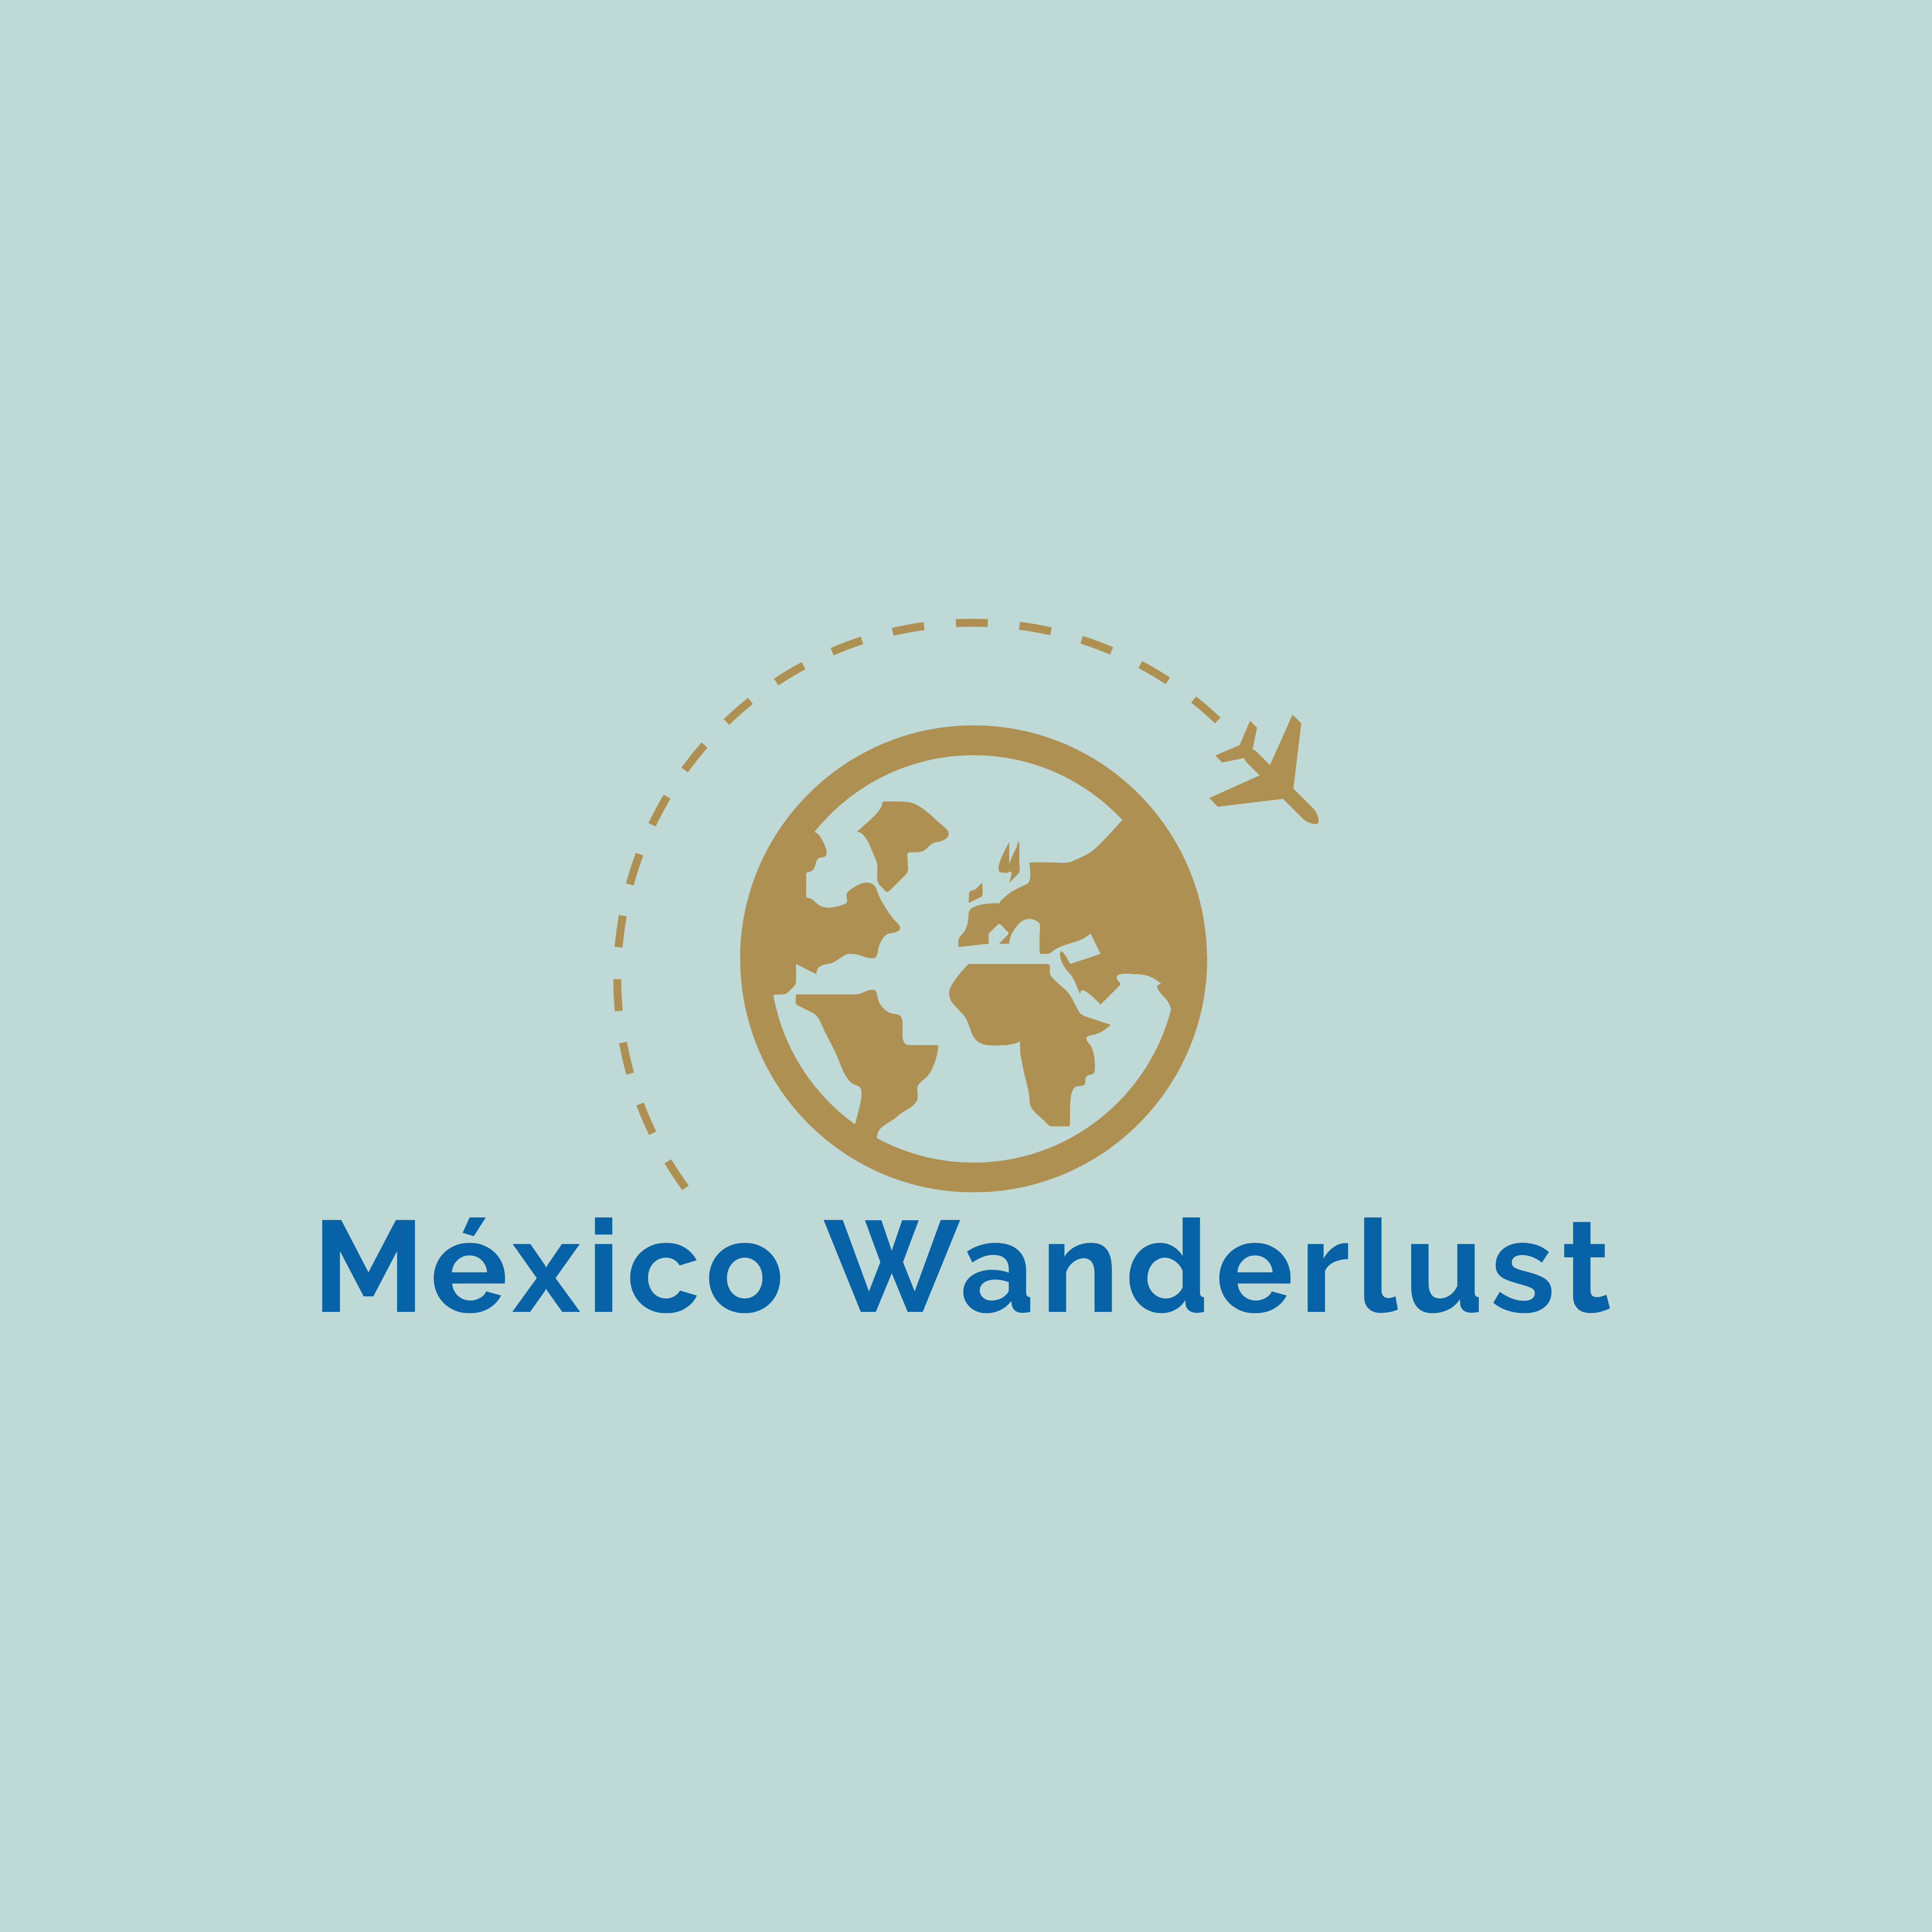 Mexico Wanderlust